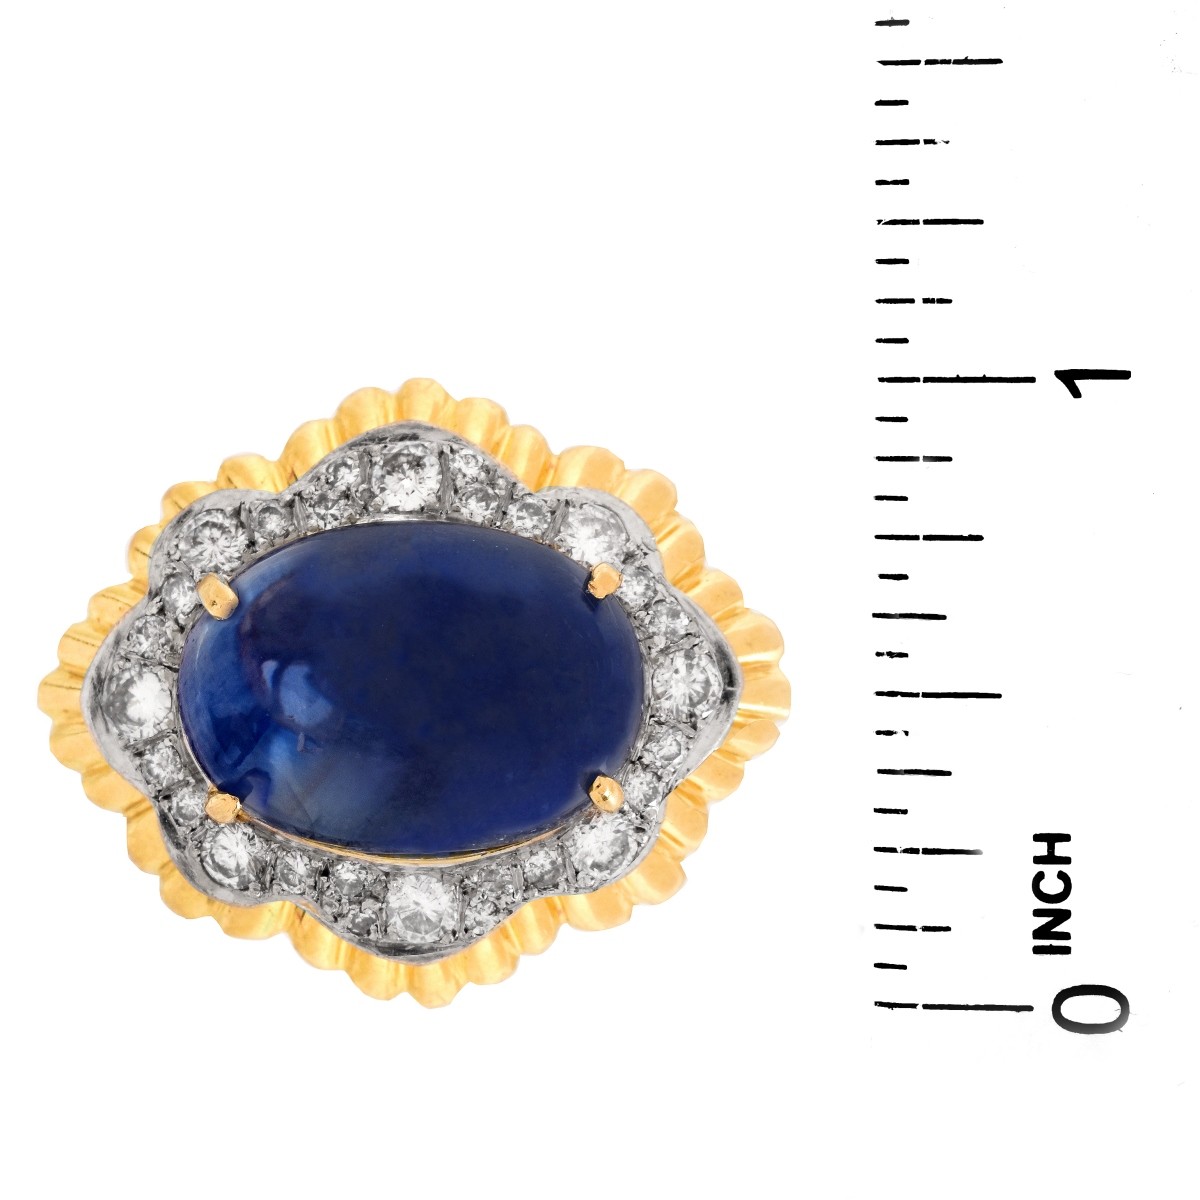 22.0ct Sapphire, Diamond and 18K Ring